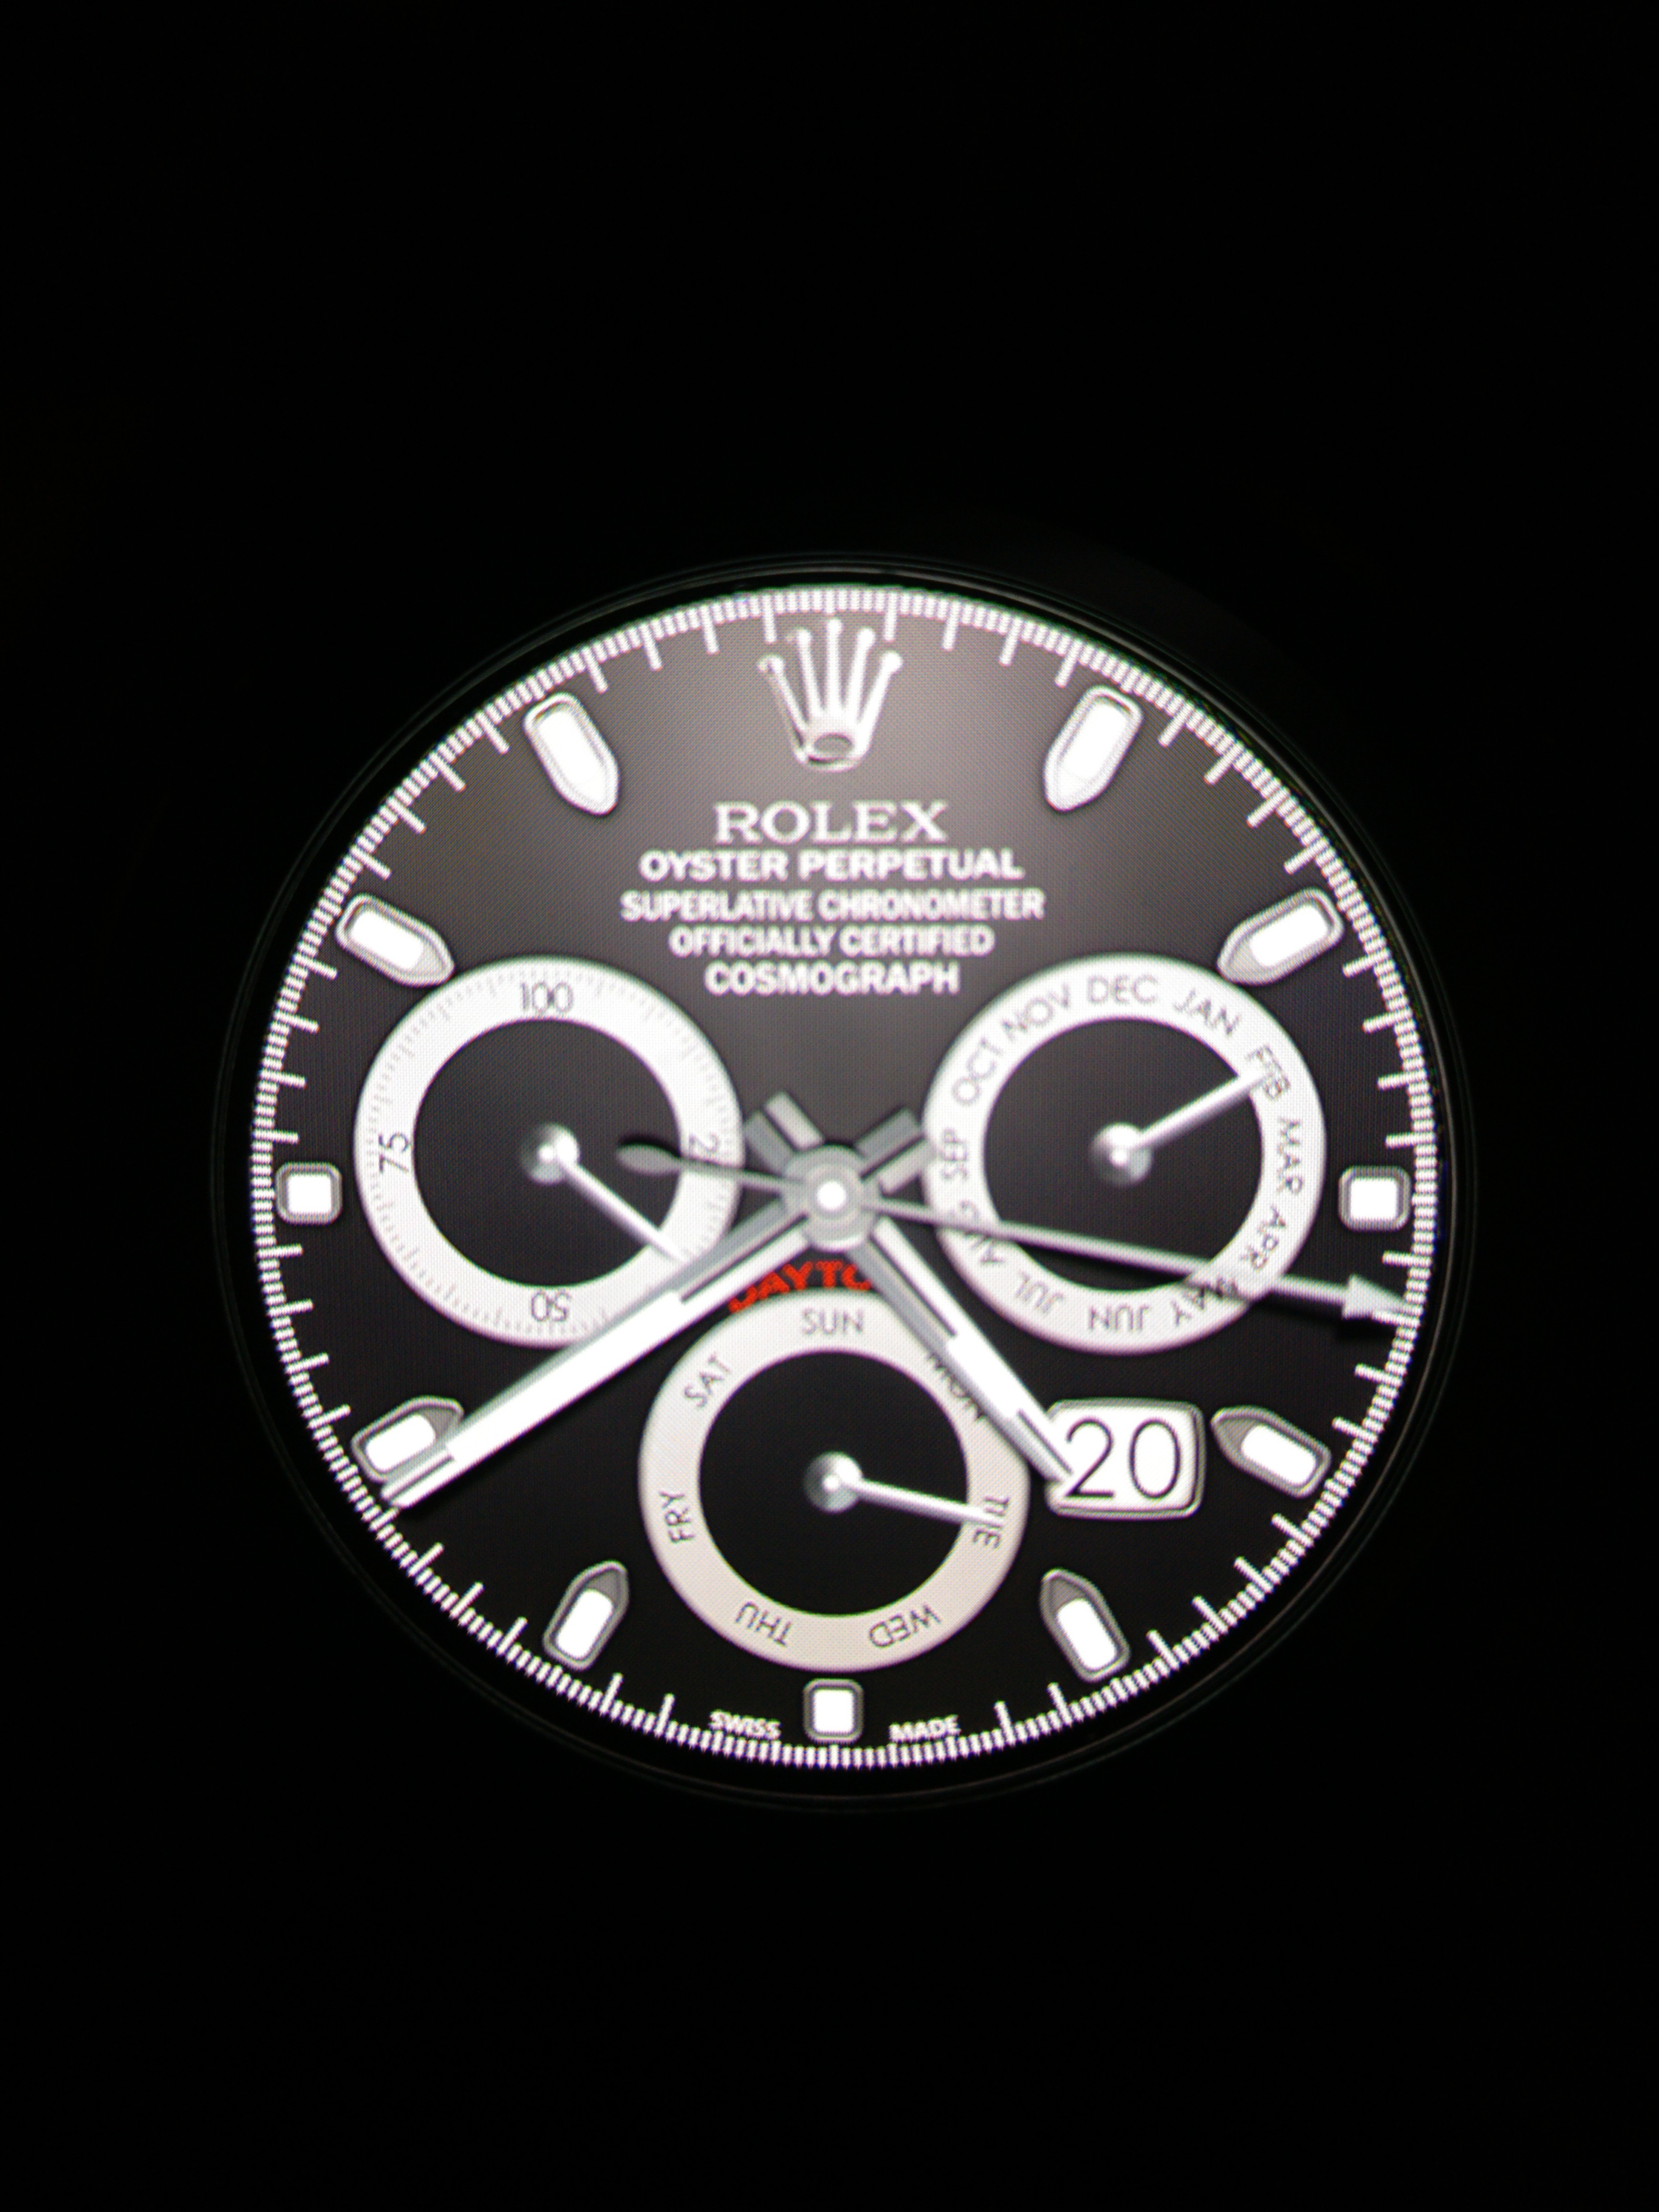 Rolex Watch Face Hd - www.inf-inet.com